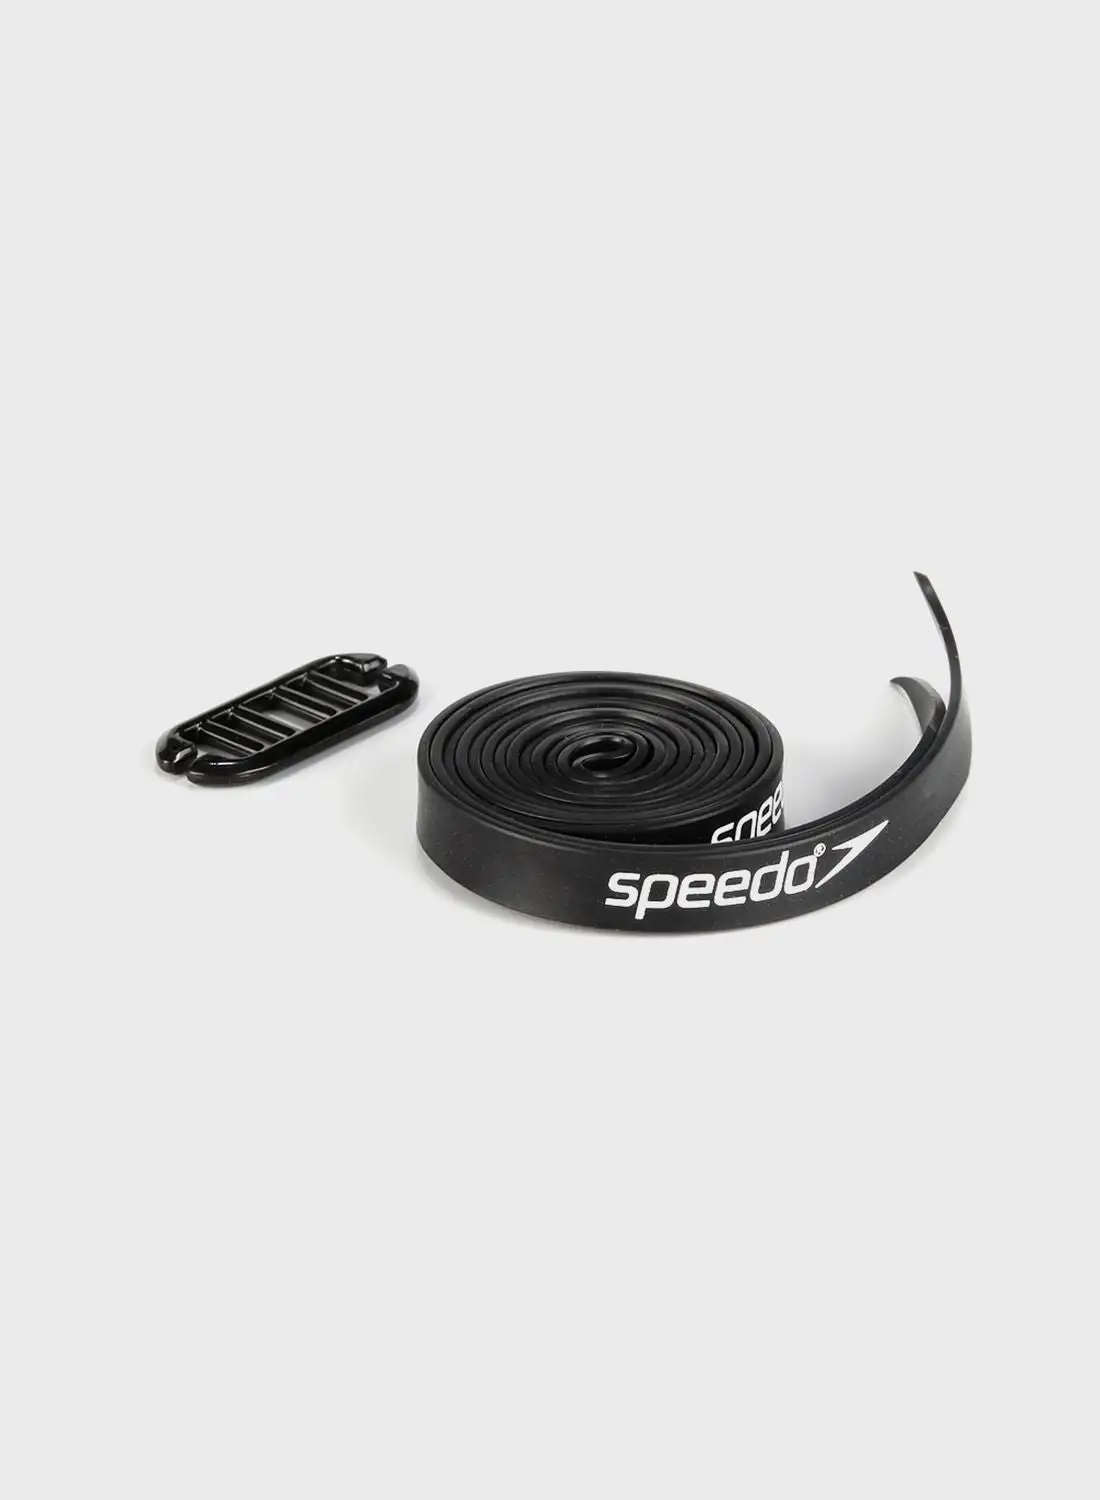 speedo Silicone Strap Branding Cap